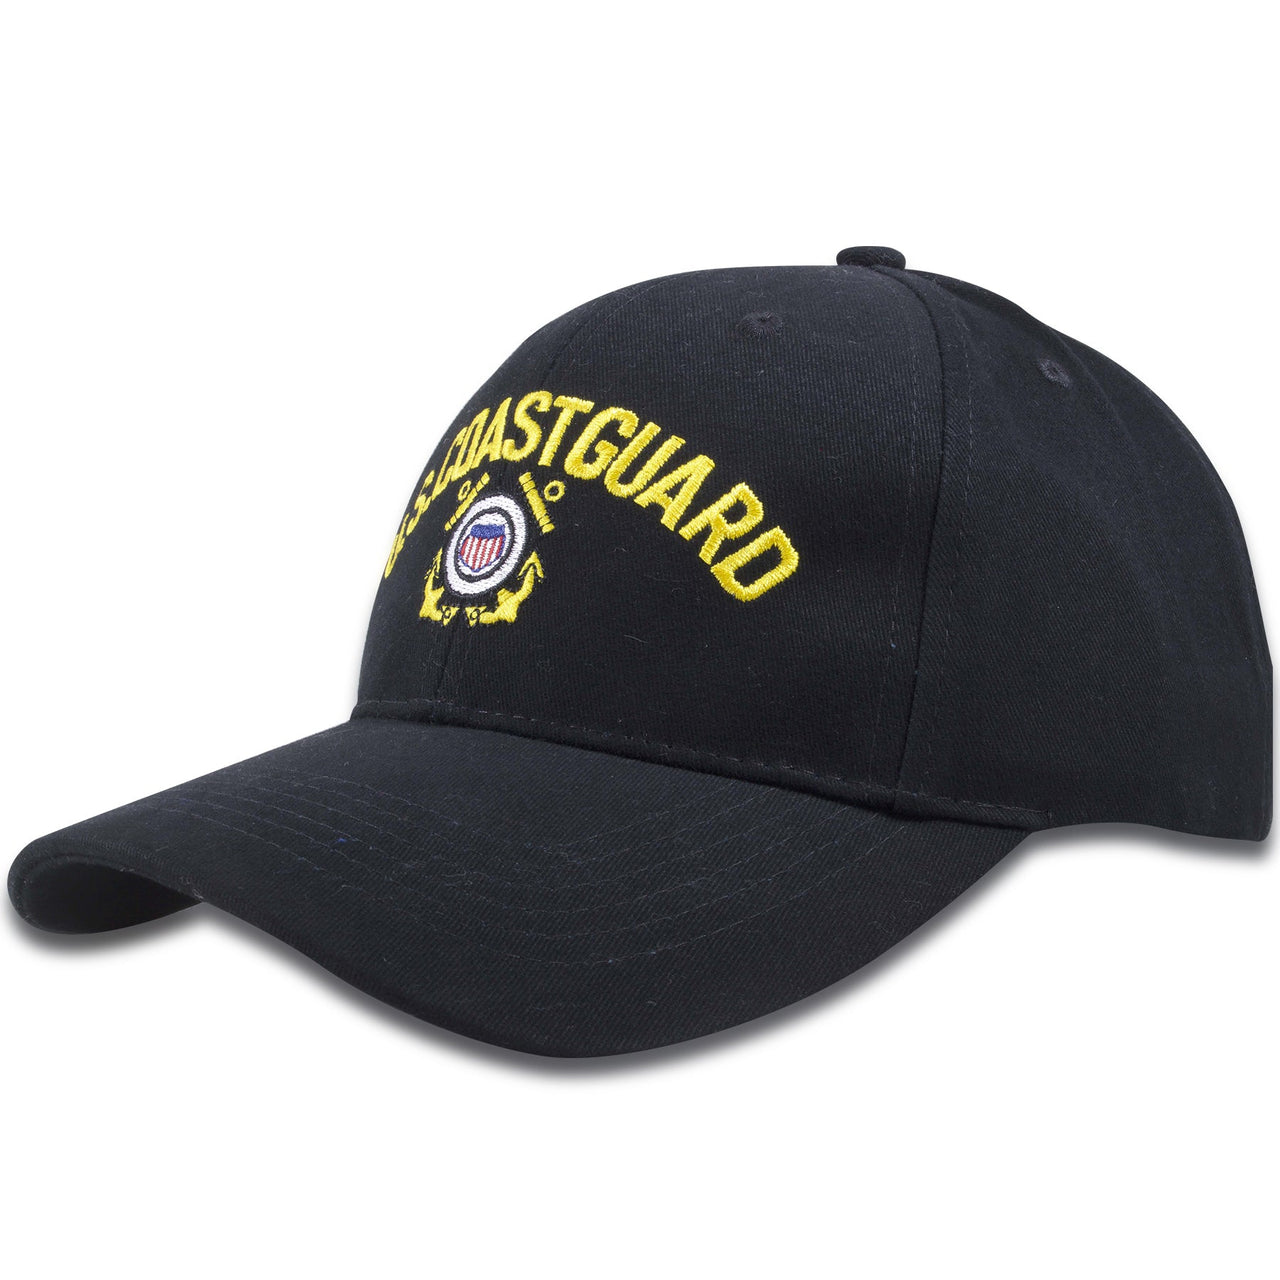 Rothco United States Coast Guard Black Adjustable Baseball Cap